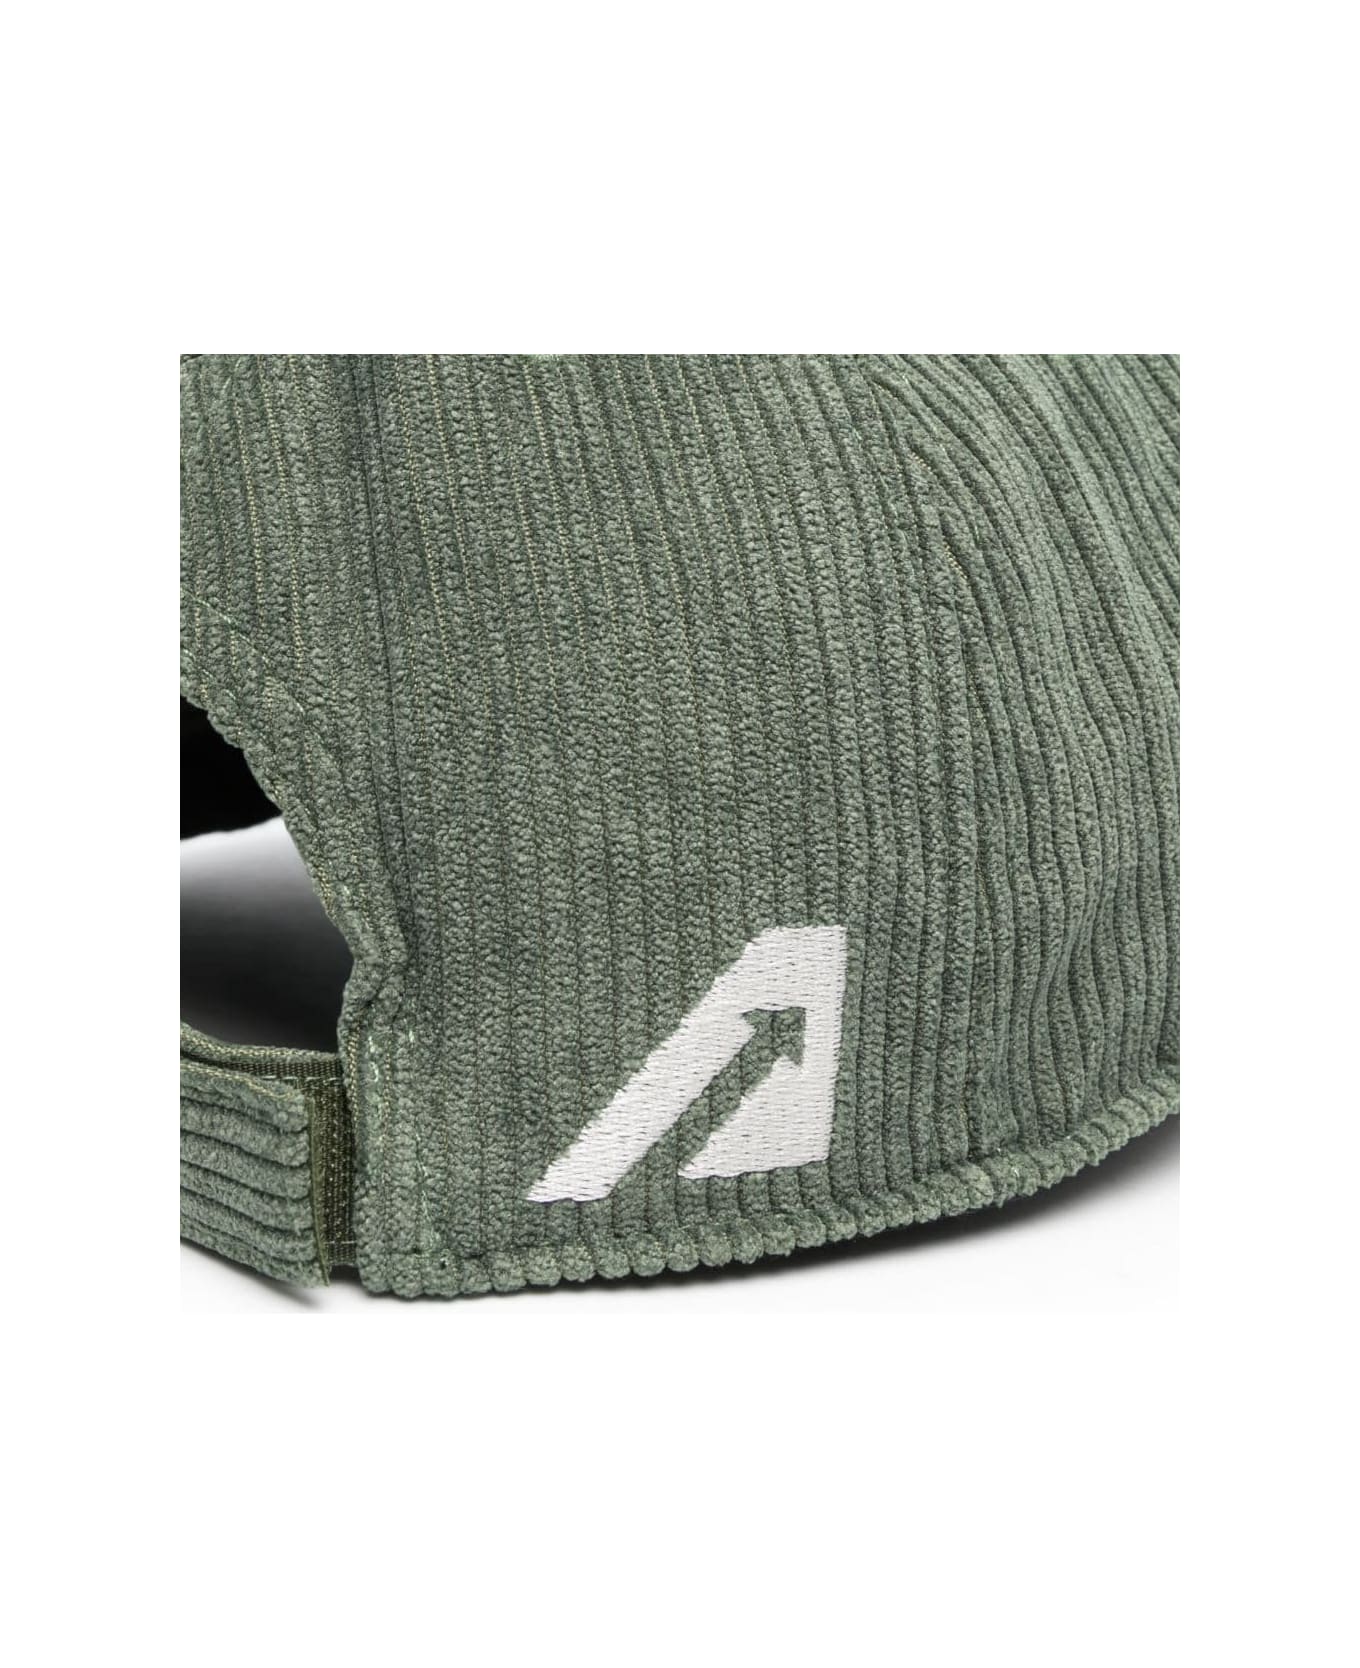 Autry Corduroy Baseball Cap With Logo - Verde 帽子